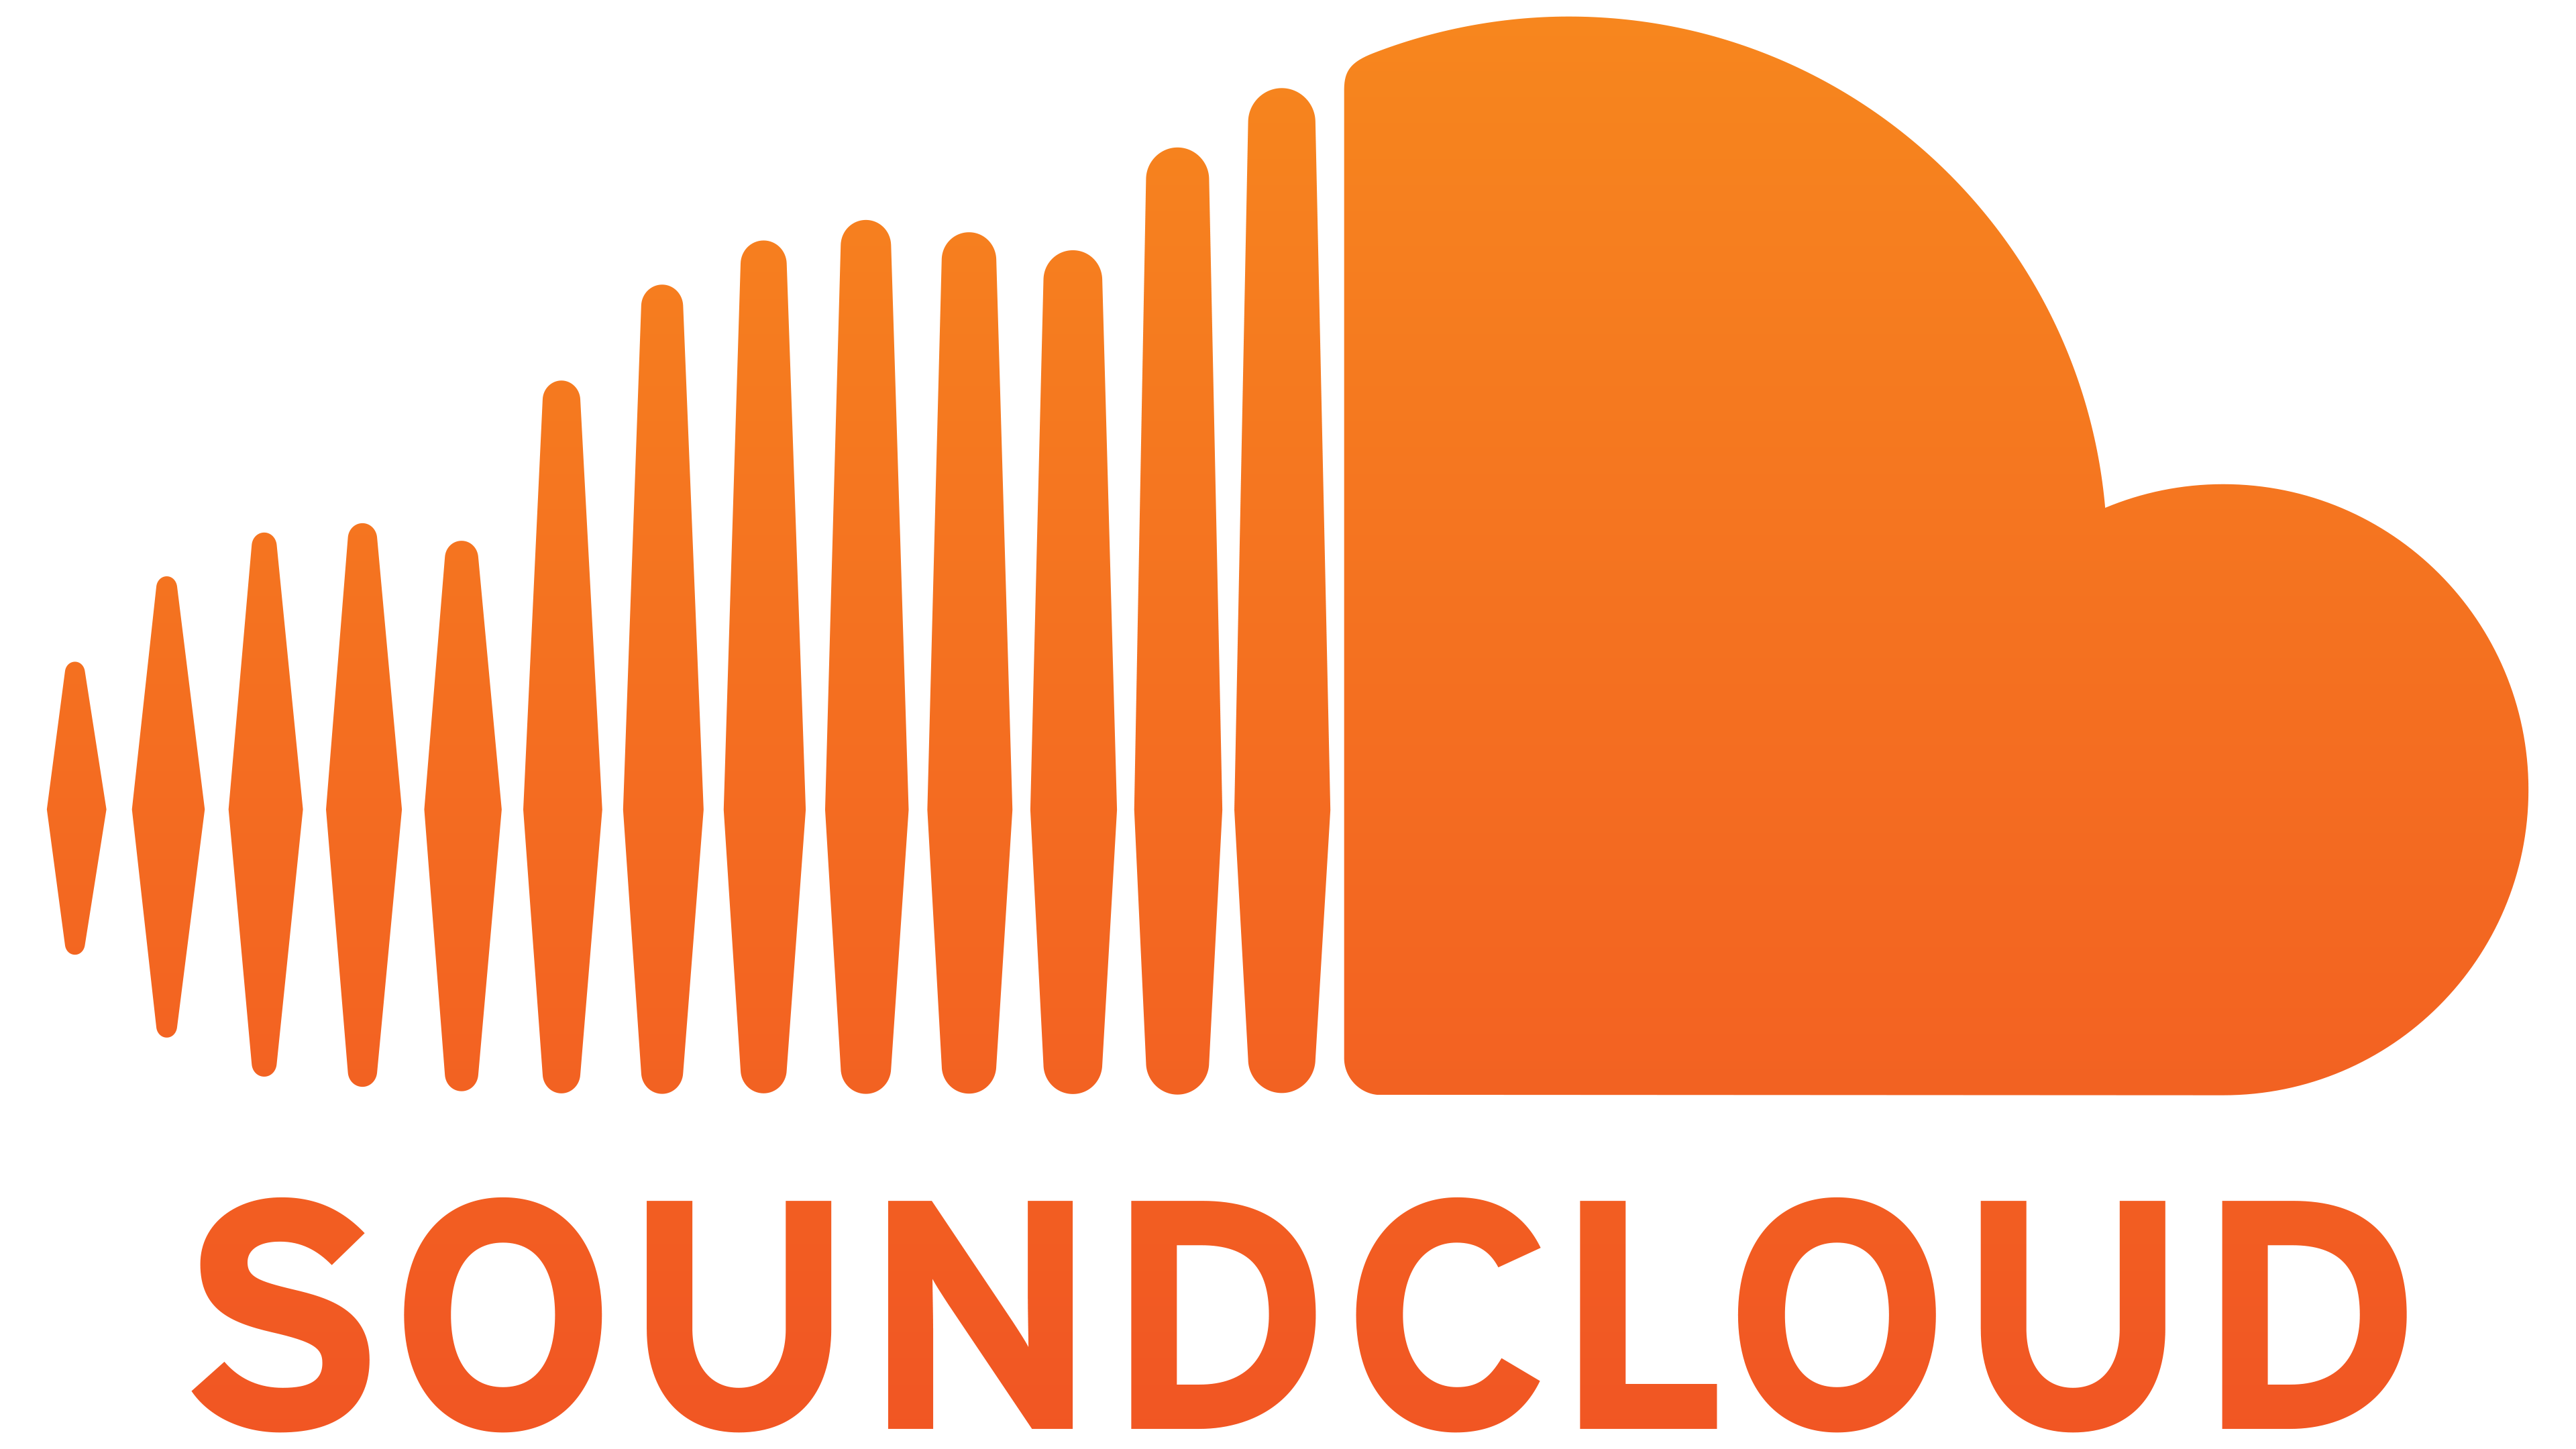 wyndell long dj mixes on soundcloud